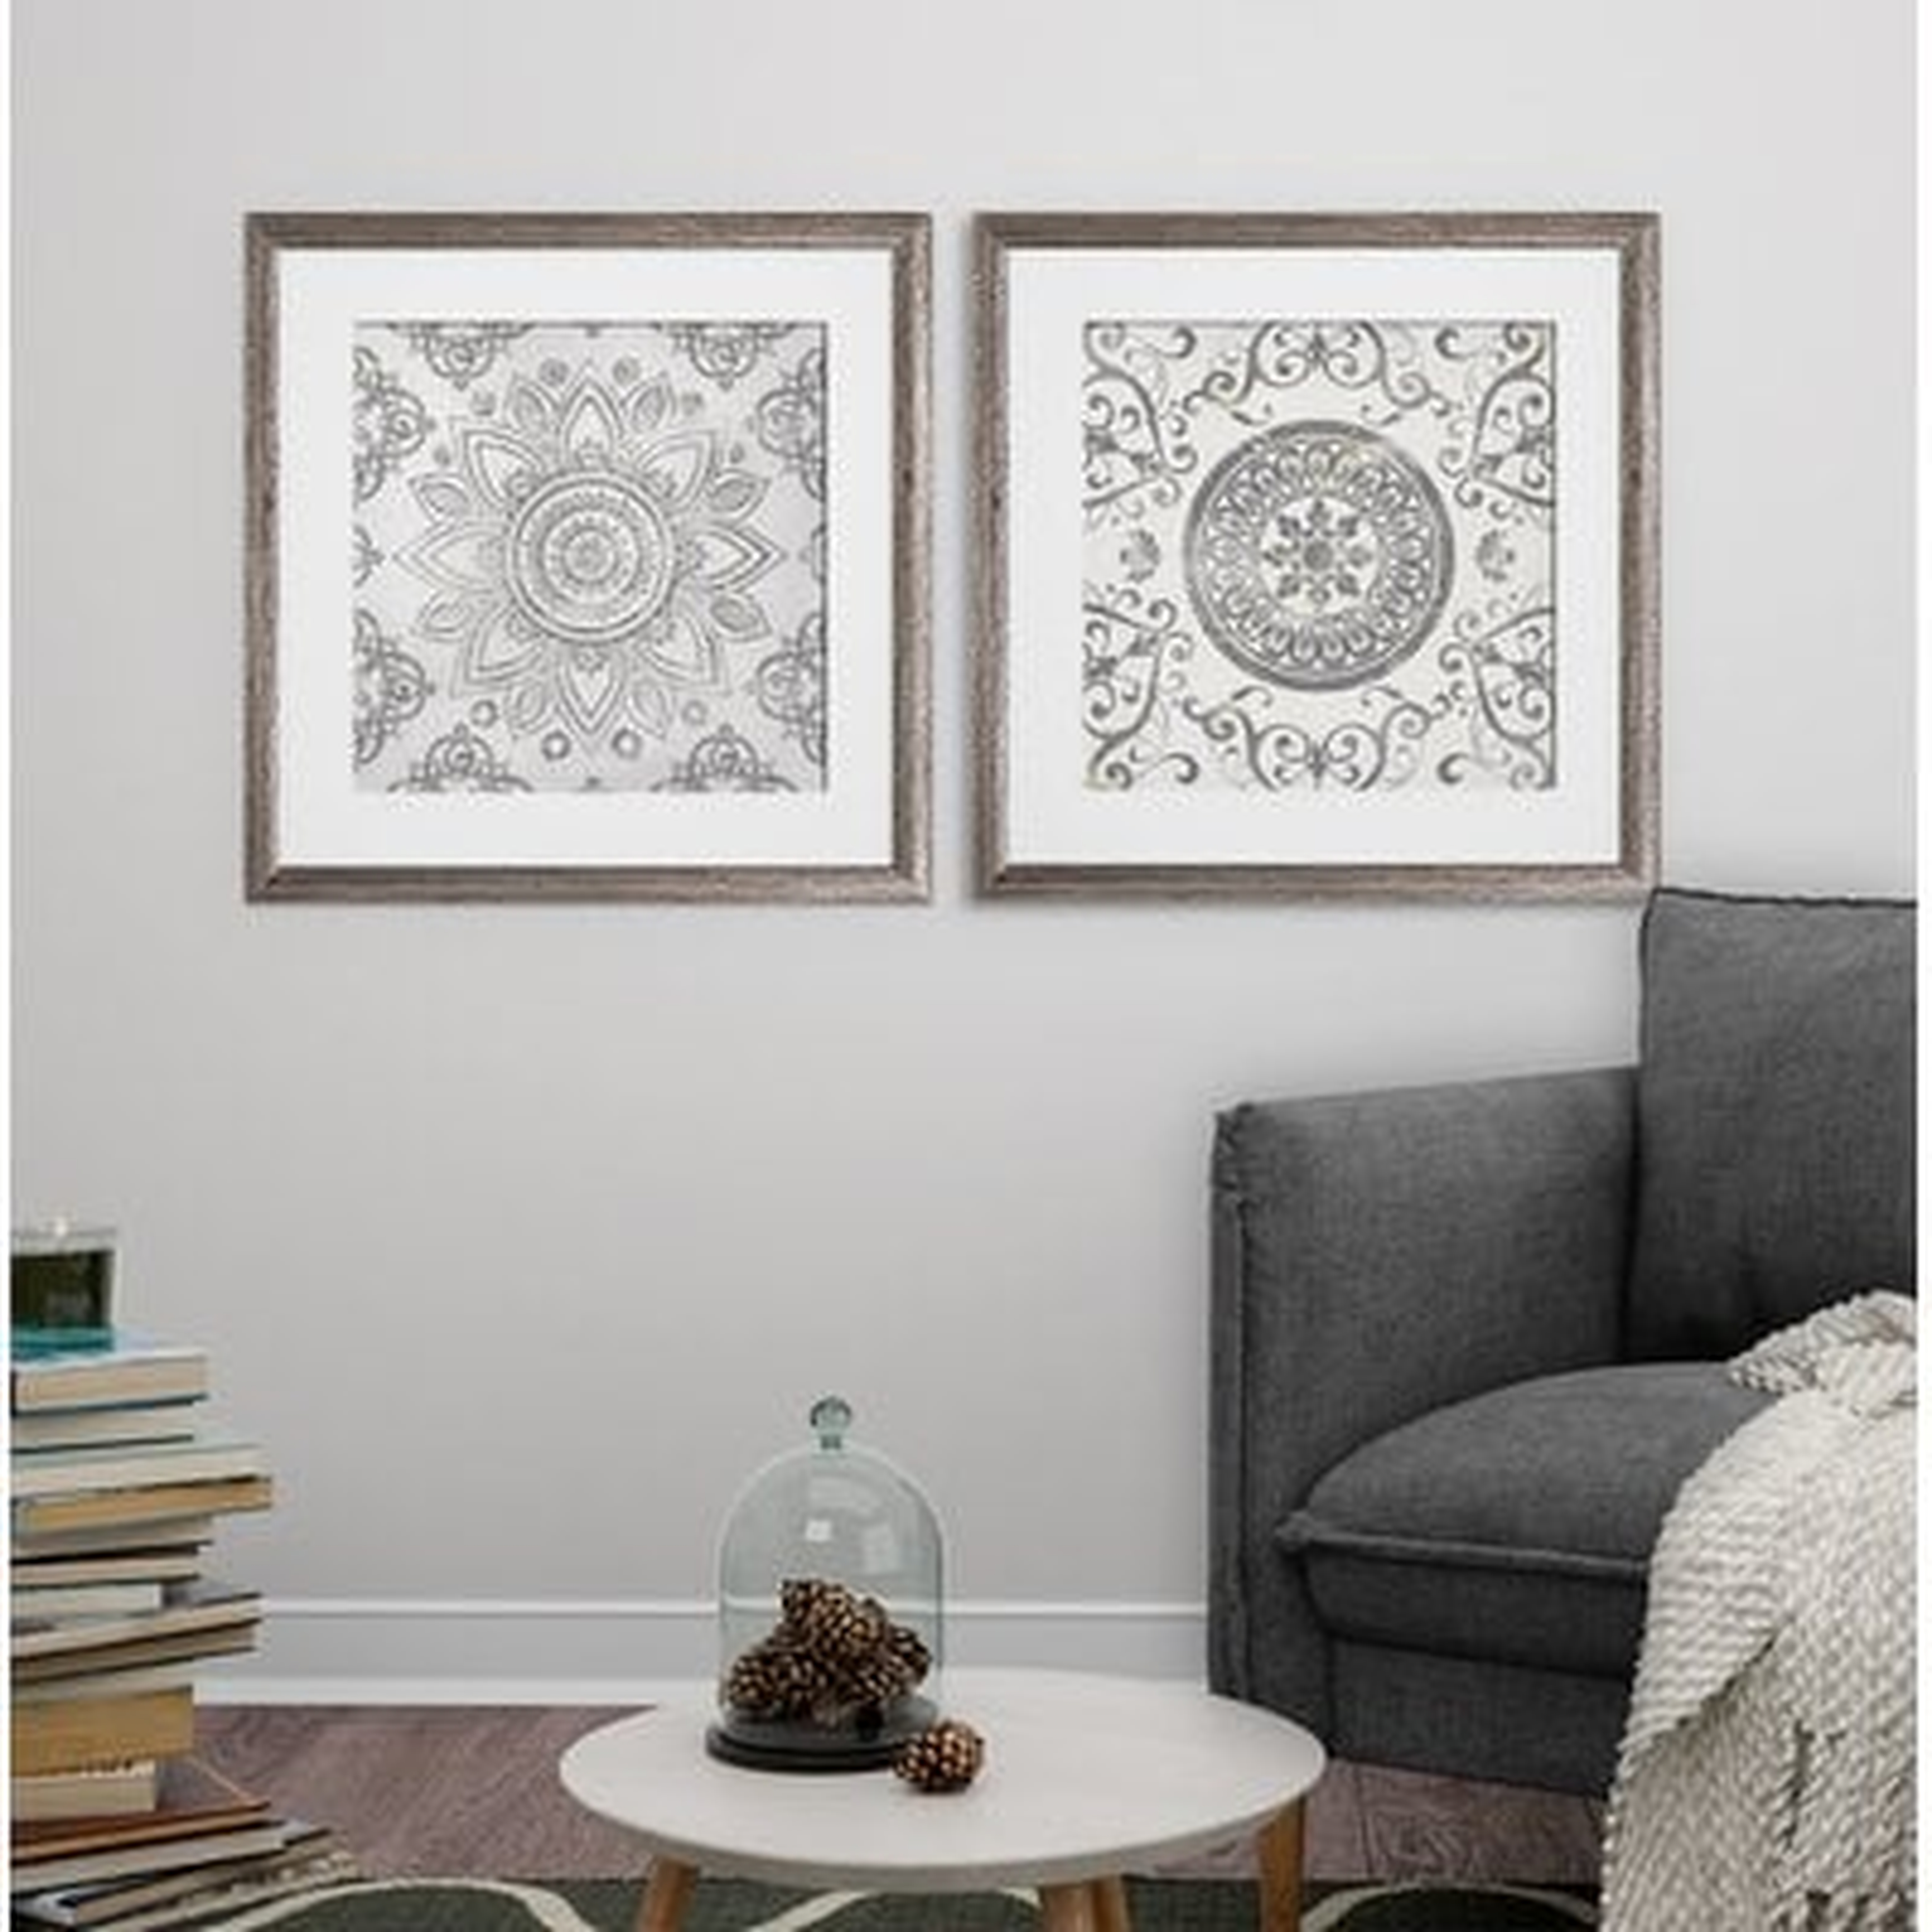 'Mandala Sunburst' 2 Piece Framed Graphic Art Print Set - Wayfair